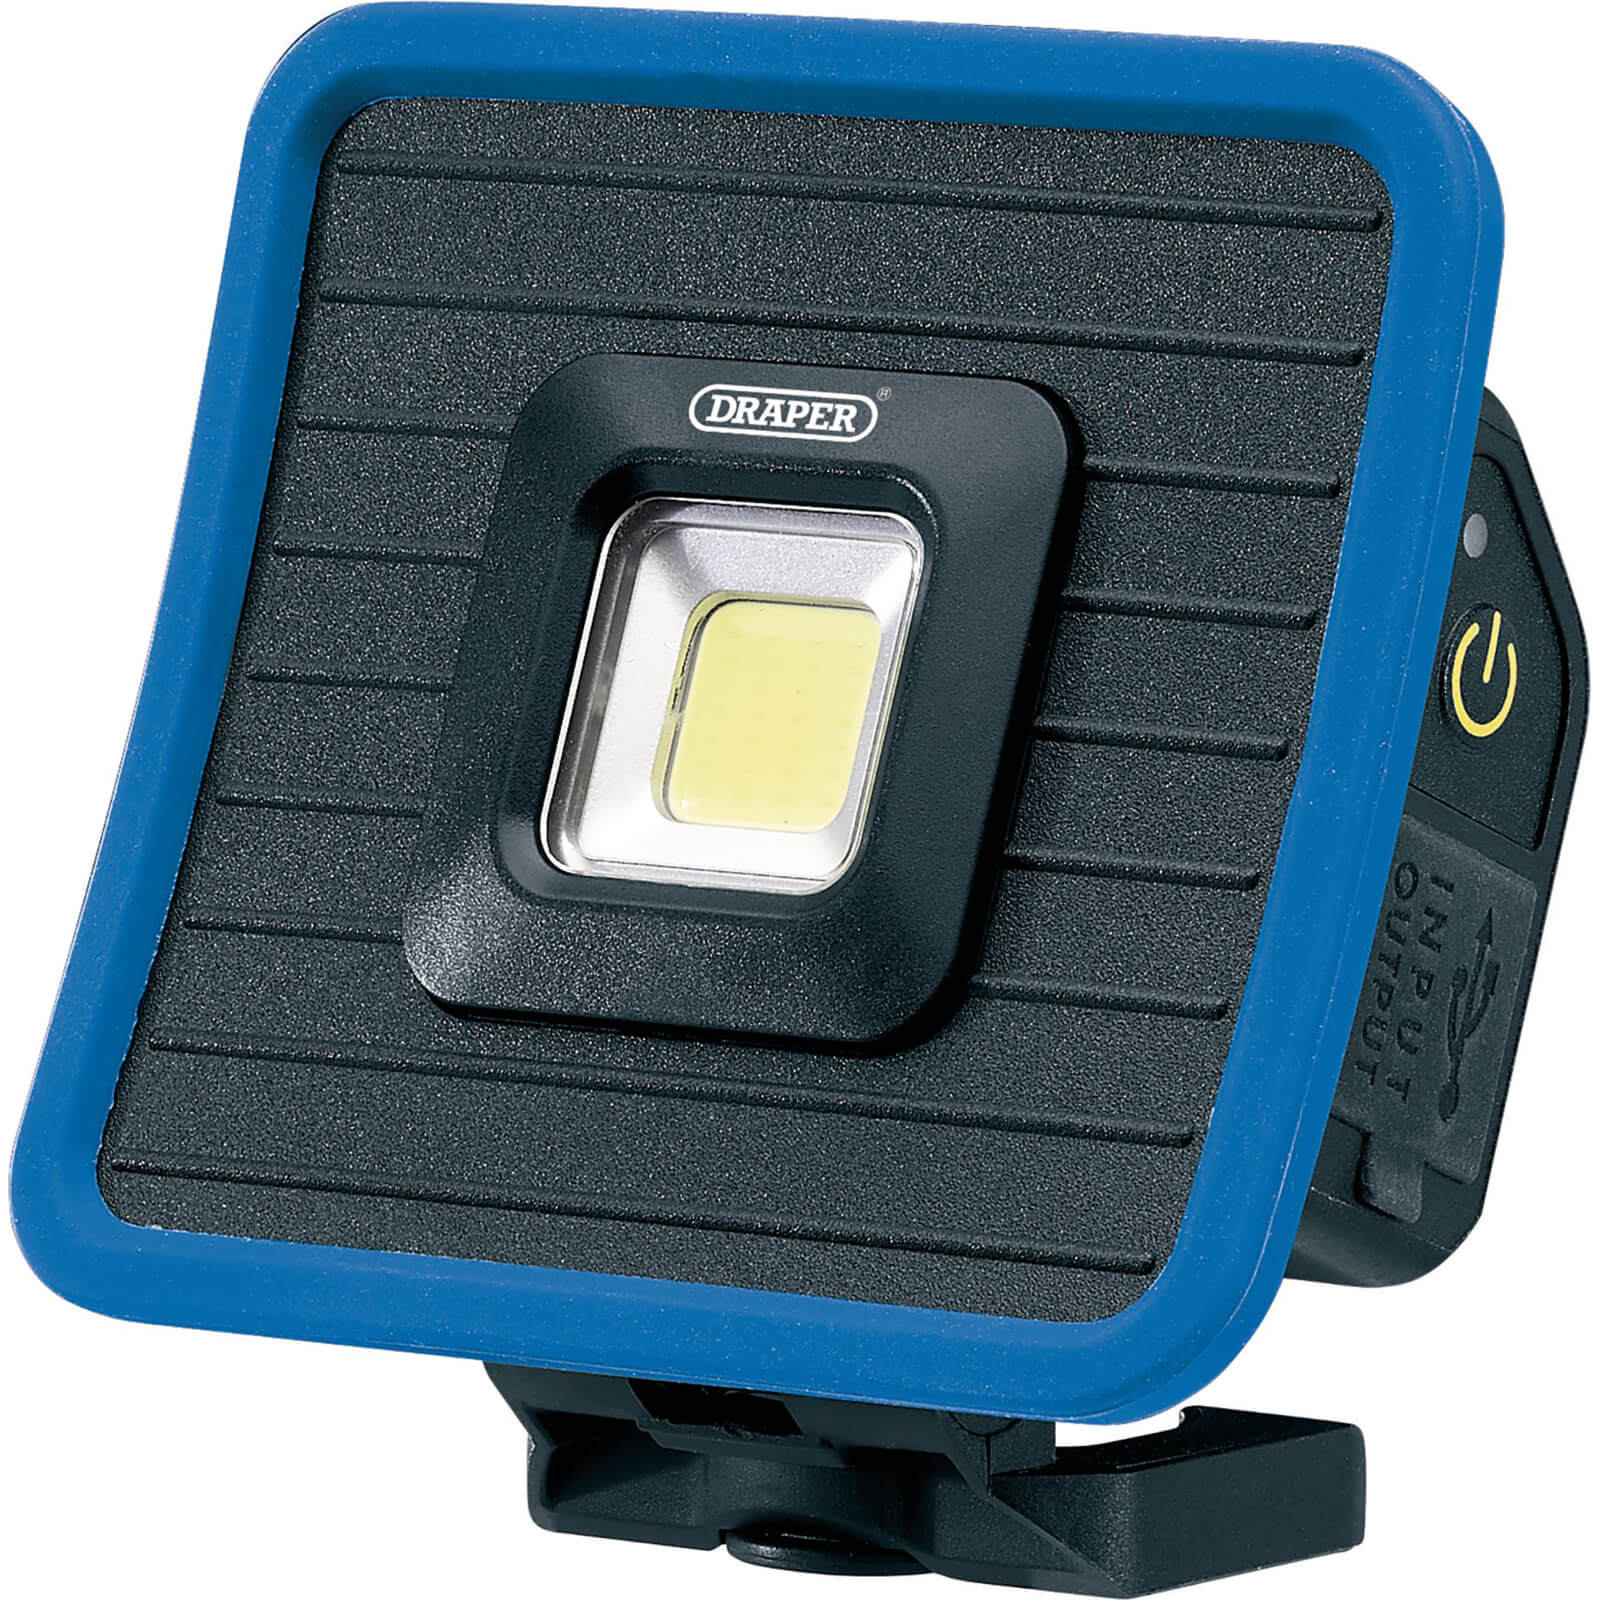 Draper COB LED Rechargeable Mini Flood Light and Power Bank